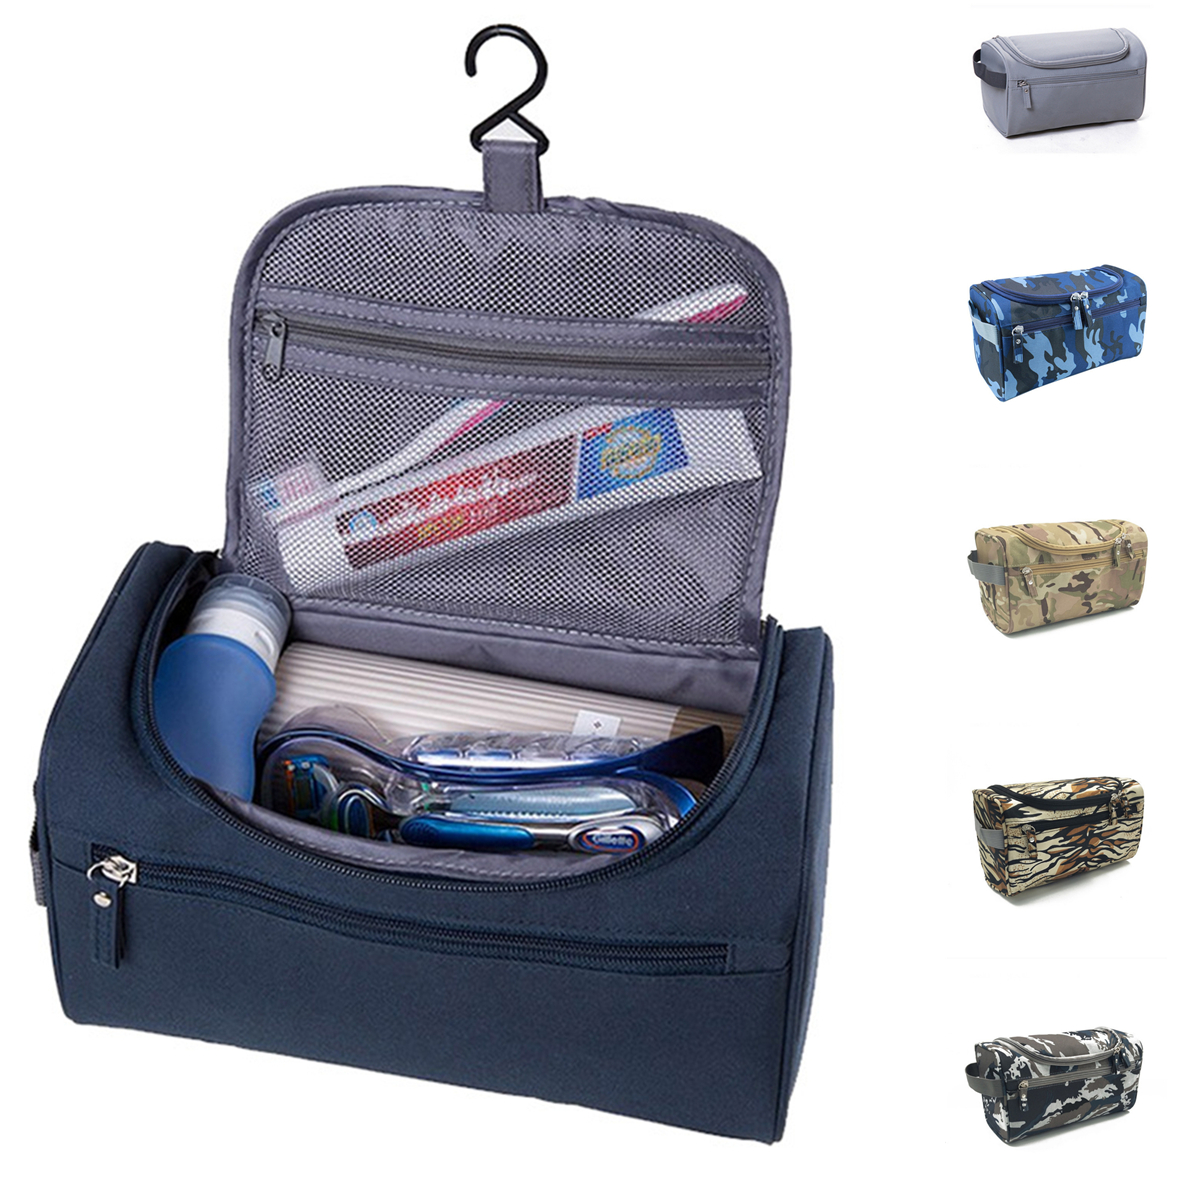 Waterproof-Hanging-Travel-Toiletry-Kit-Wash-Bag-Shaving-Case-300D-Oxford-Cloth-Cosmetic-Bag-1560821-1